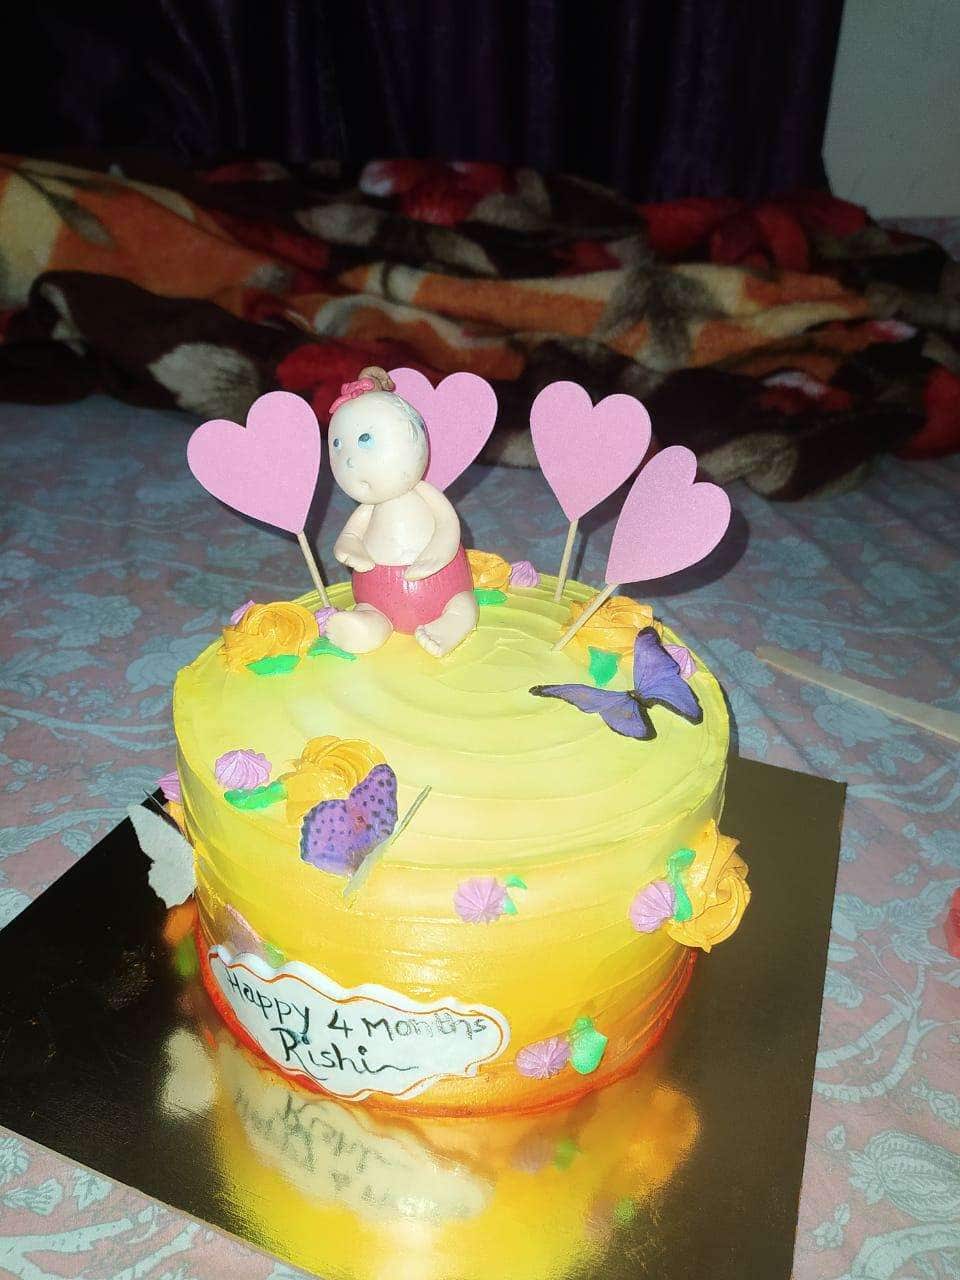 Happy Birthday Chocolate Cake - 1/2 Kg | Cakes to Amritsar